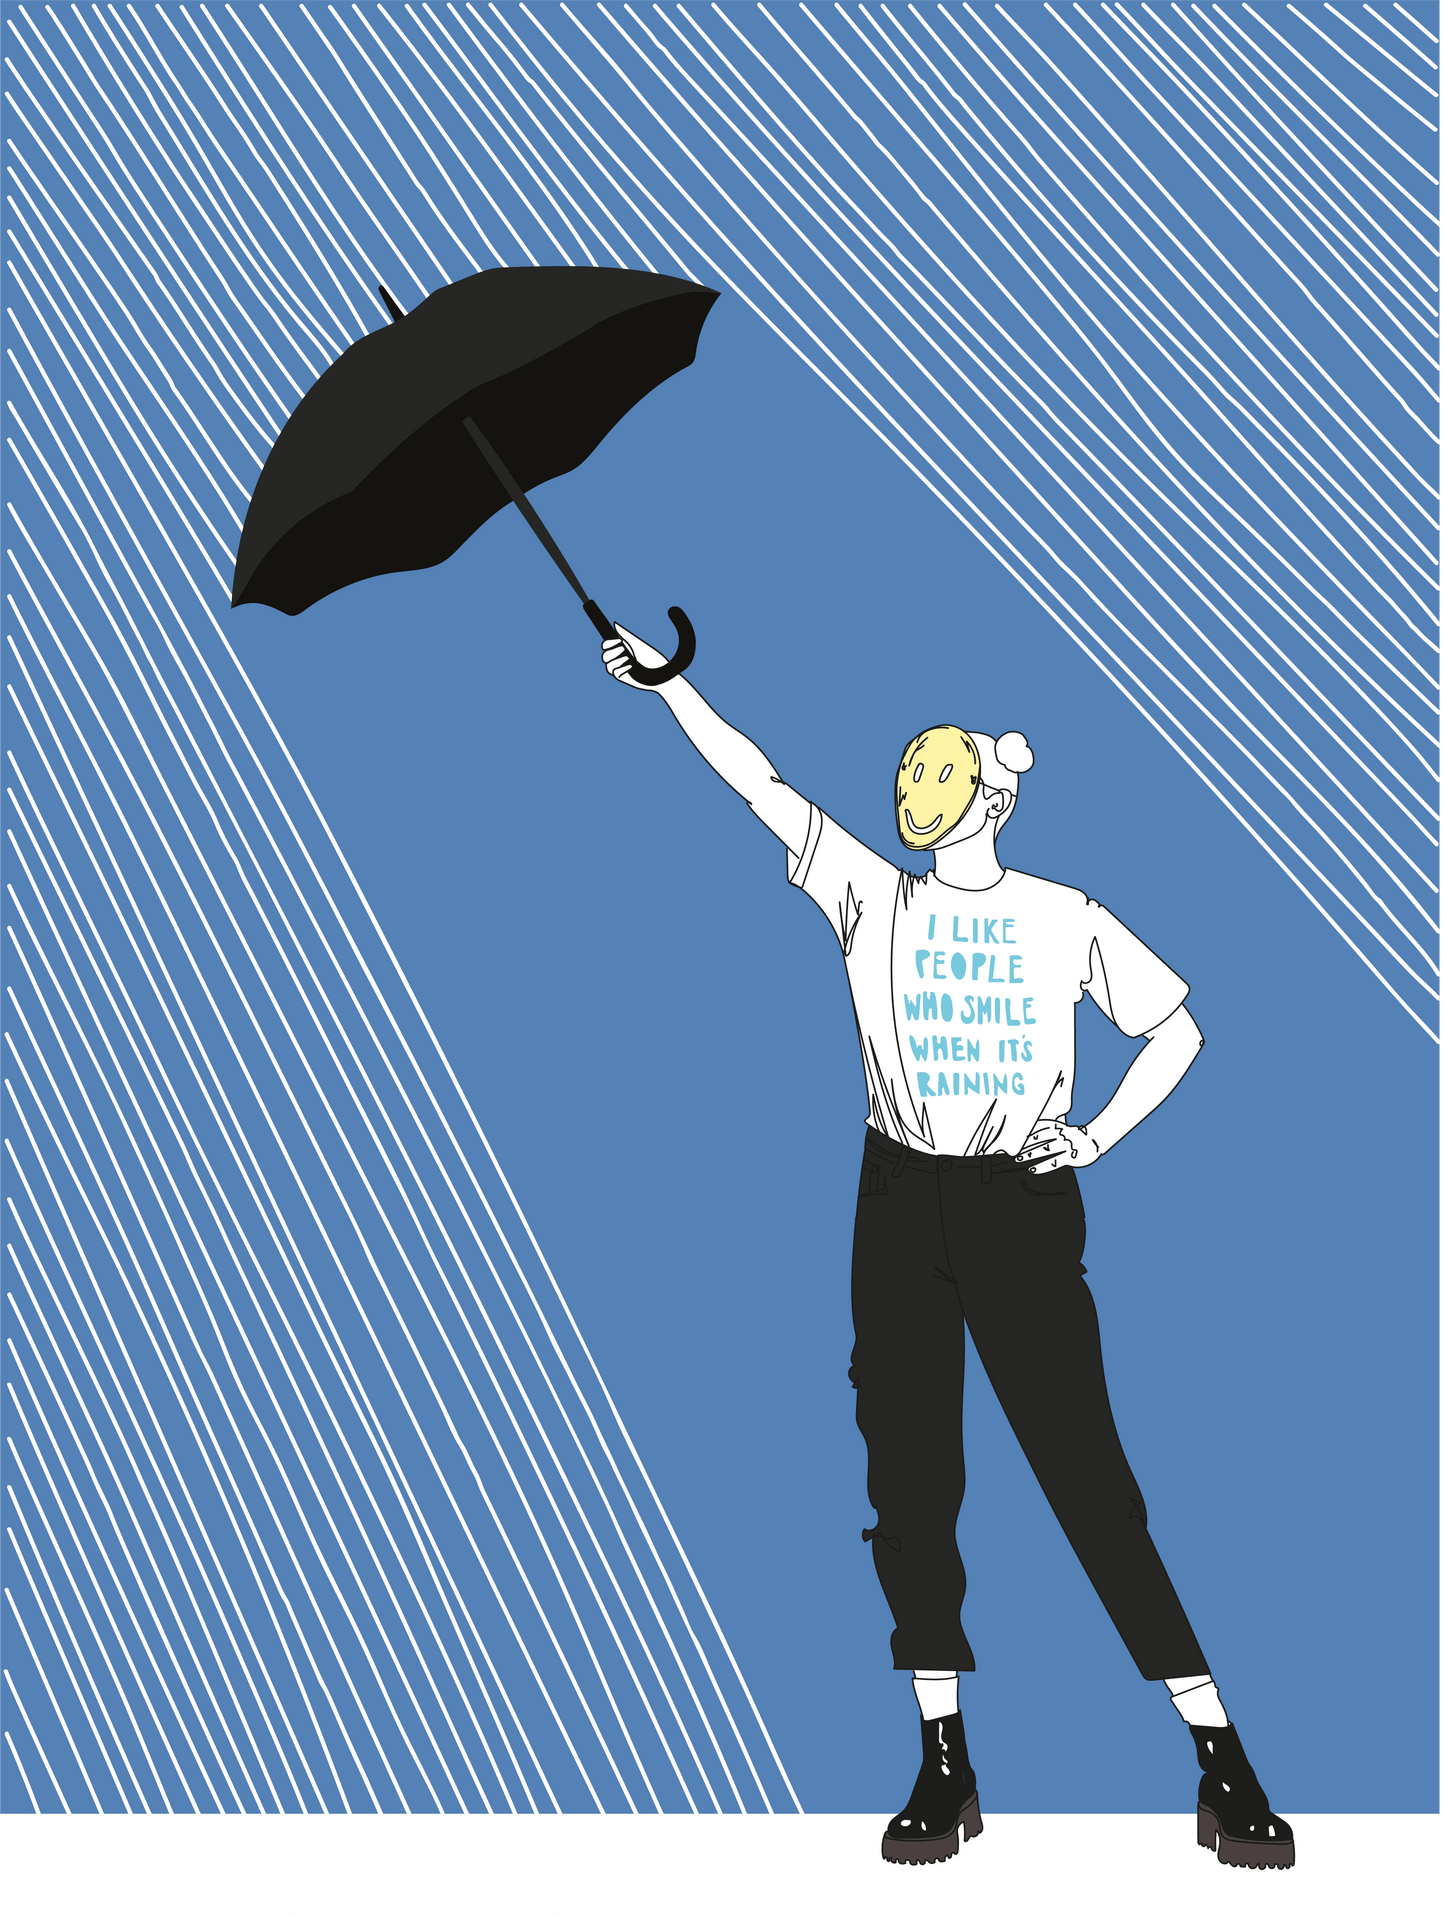 VAGPWR Illustration Print - I like people who smile when its raining